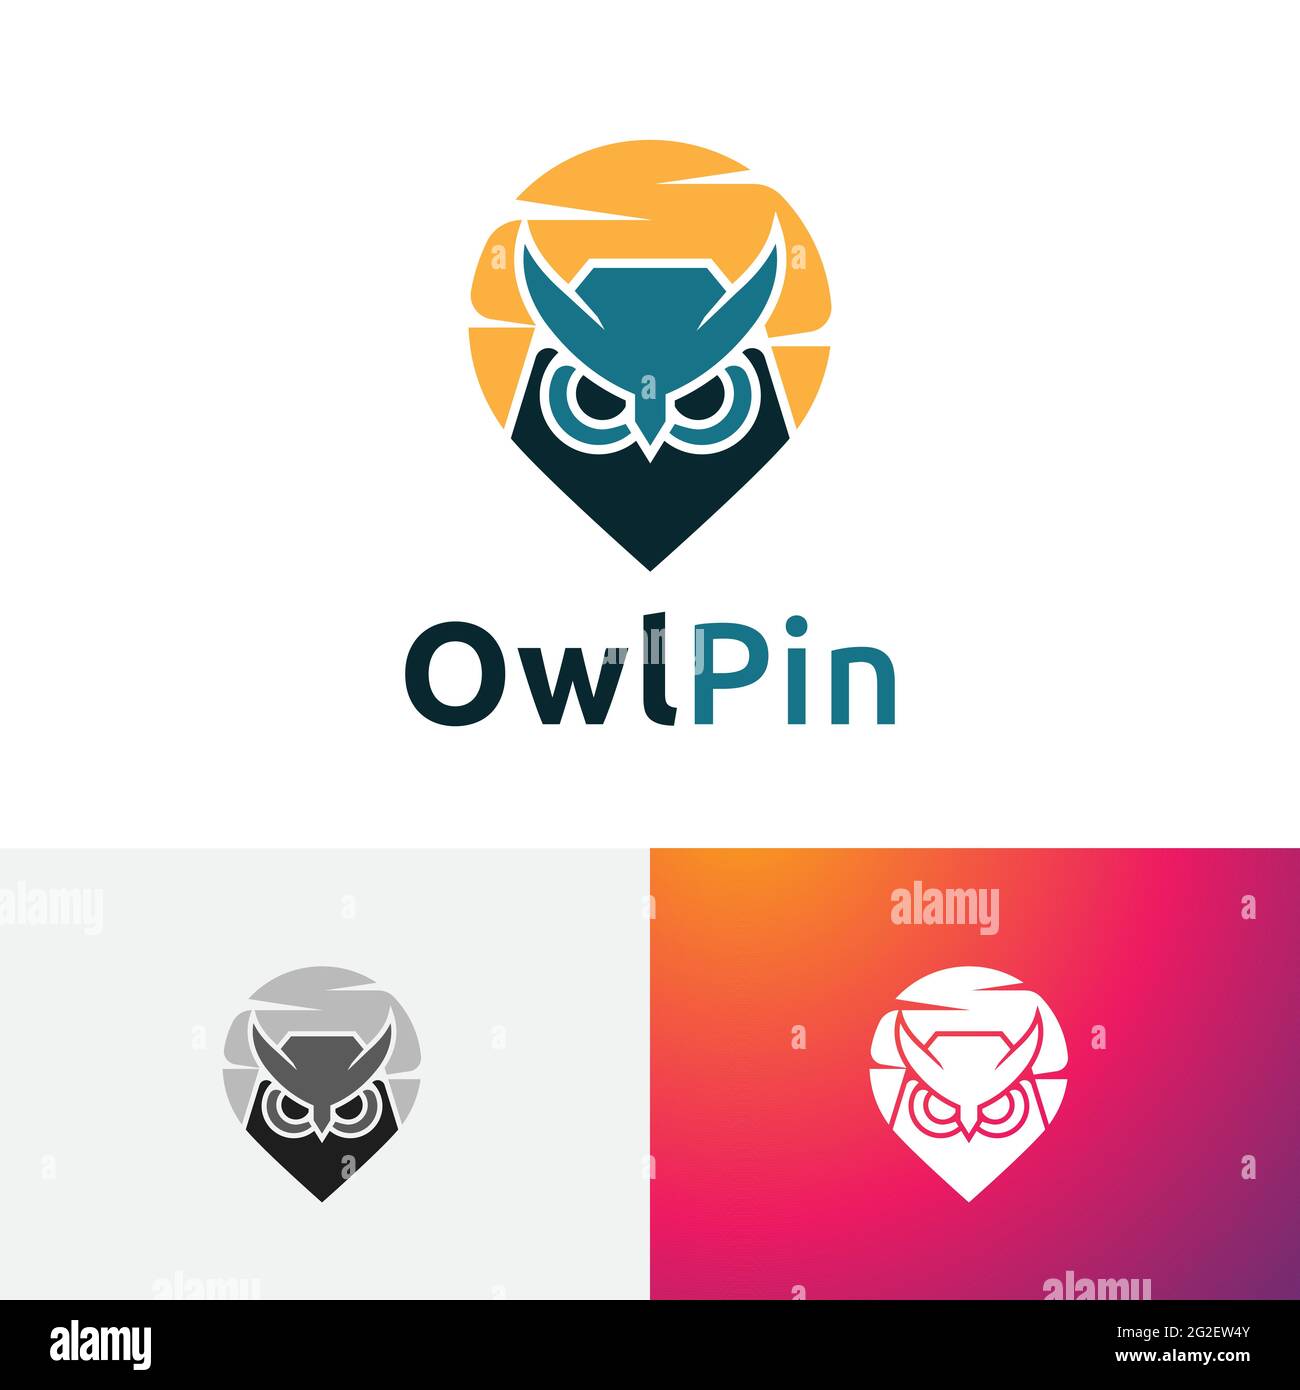 Owl Bird Pin Location Place Map Mobile Application Technology Logo Stock Vector